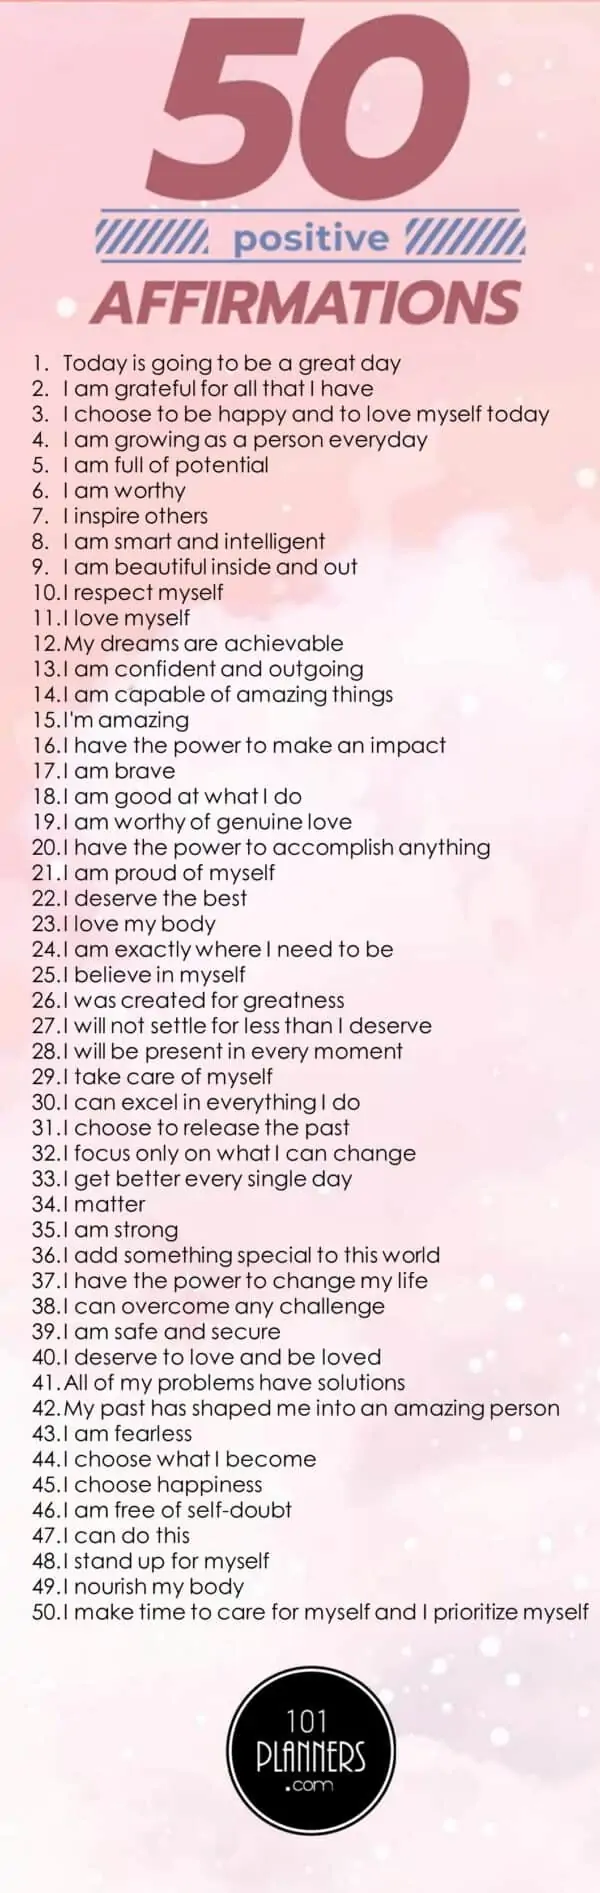 50 positive affirmations